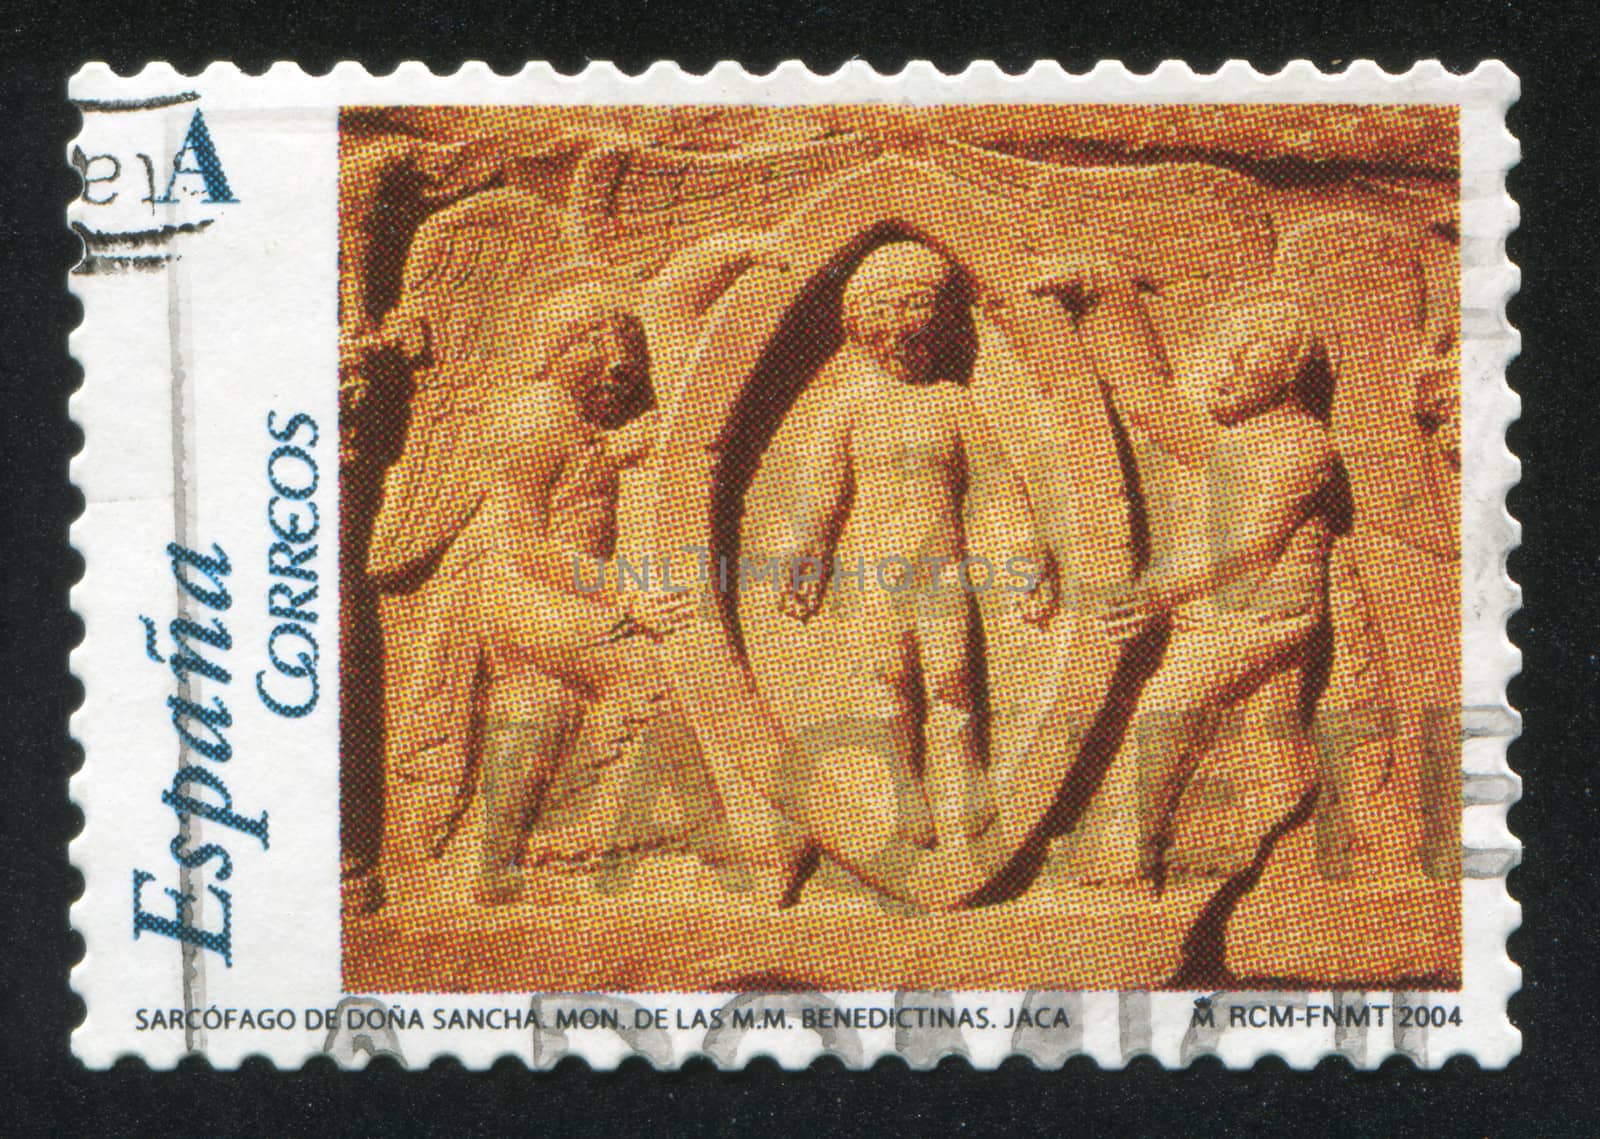 SPAIN - CIRCA 2004: stamp printed by Spain, shows Detail of Sarcophagus of Dona Sancha, Mon de Las, M.M. Benedictinas, Jaca, circa 2004